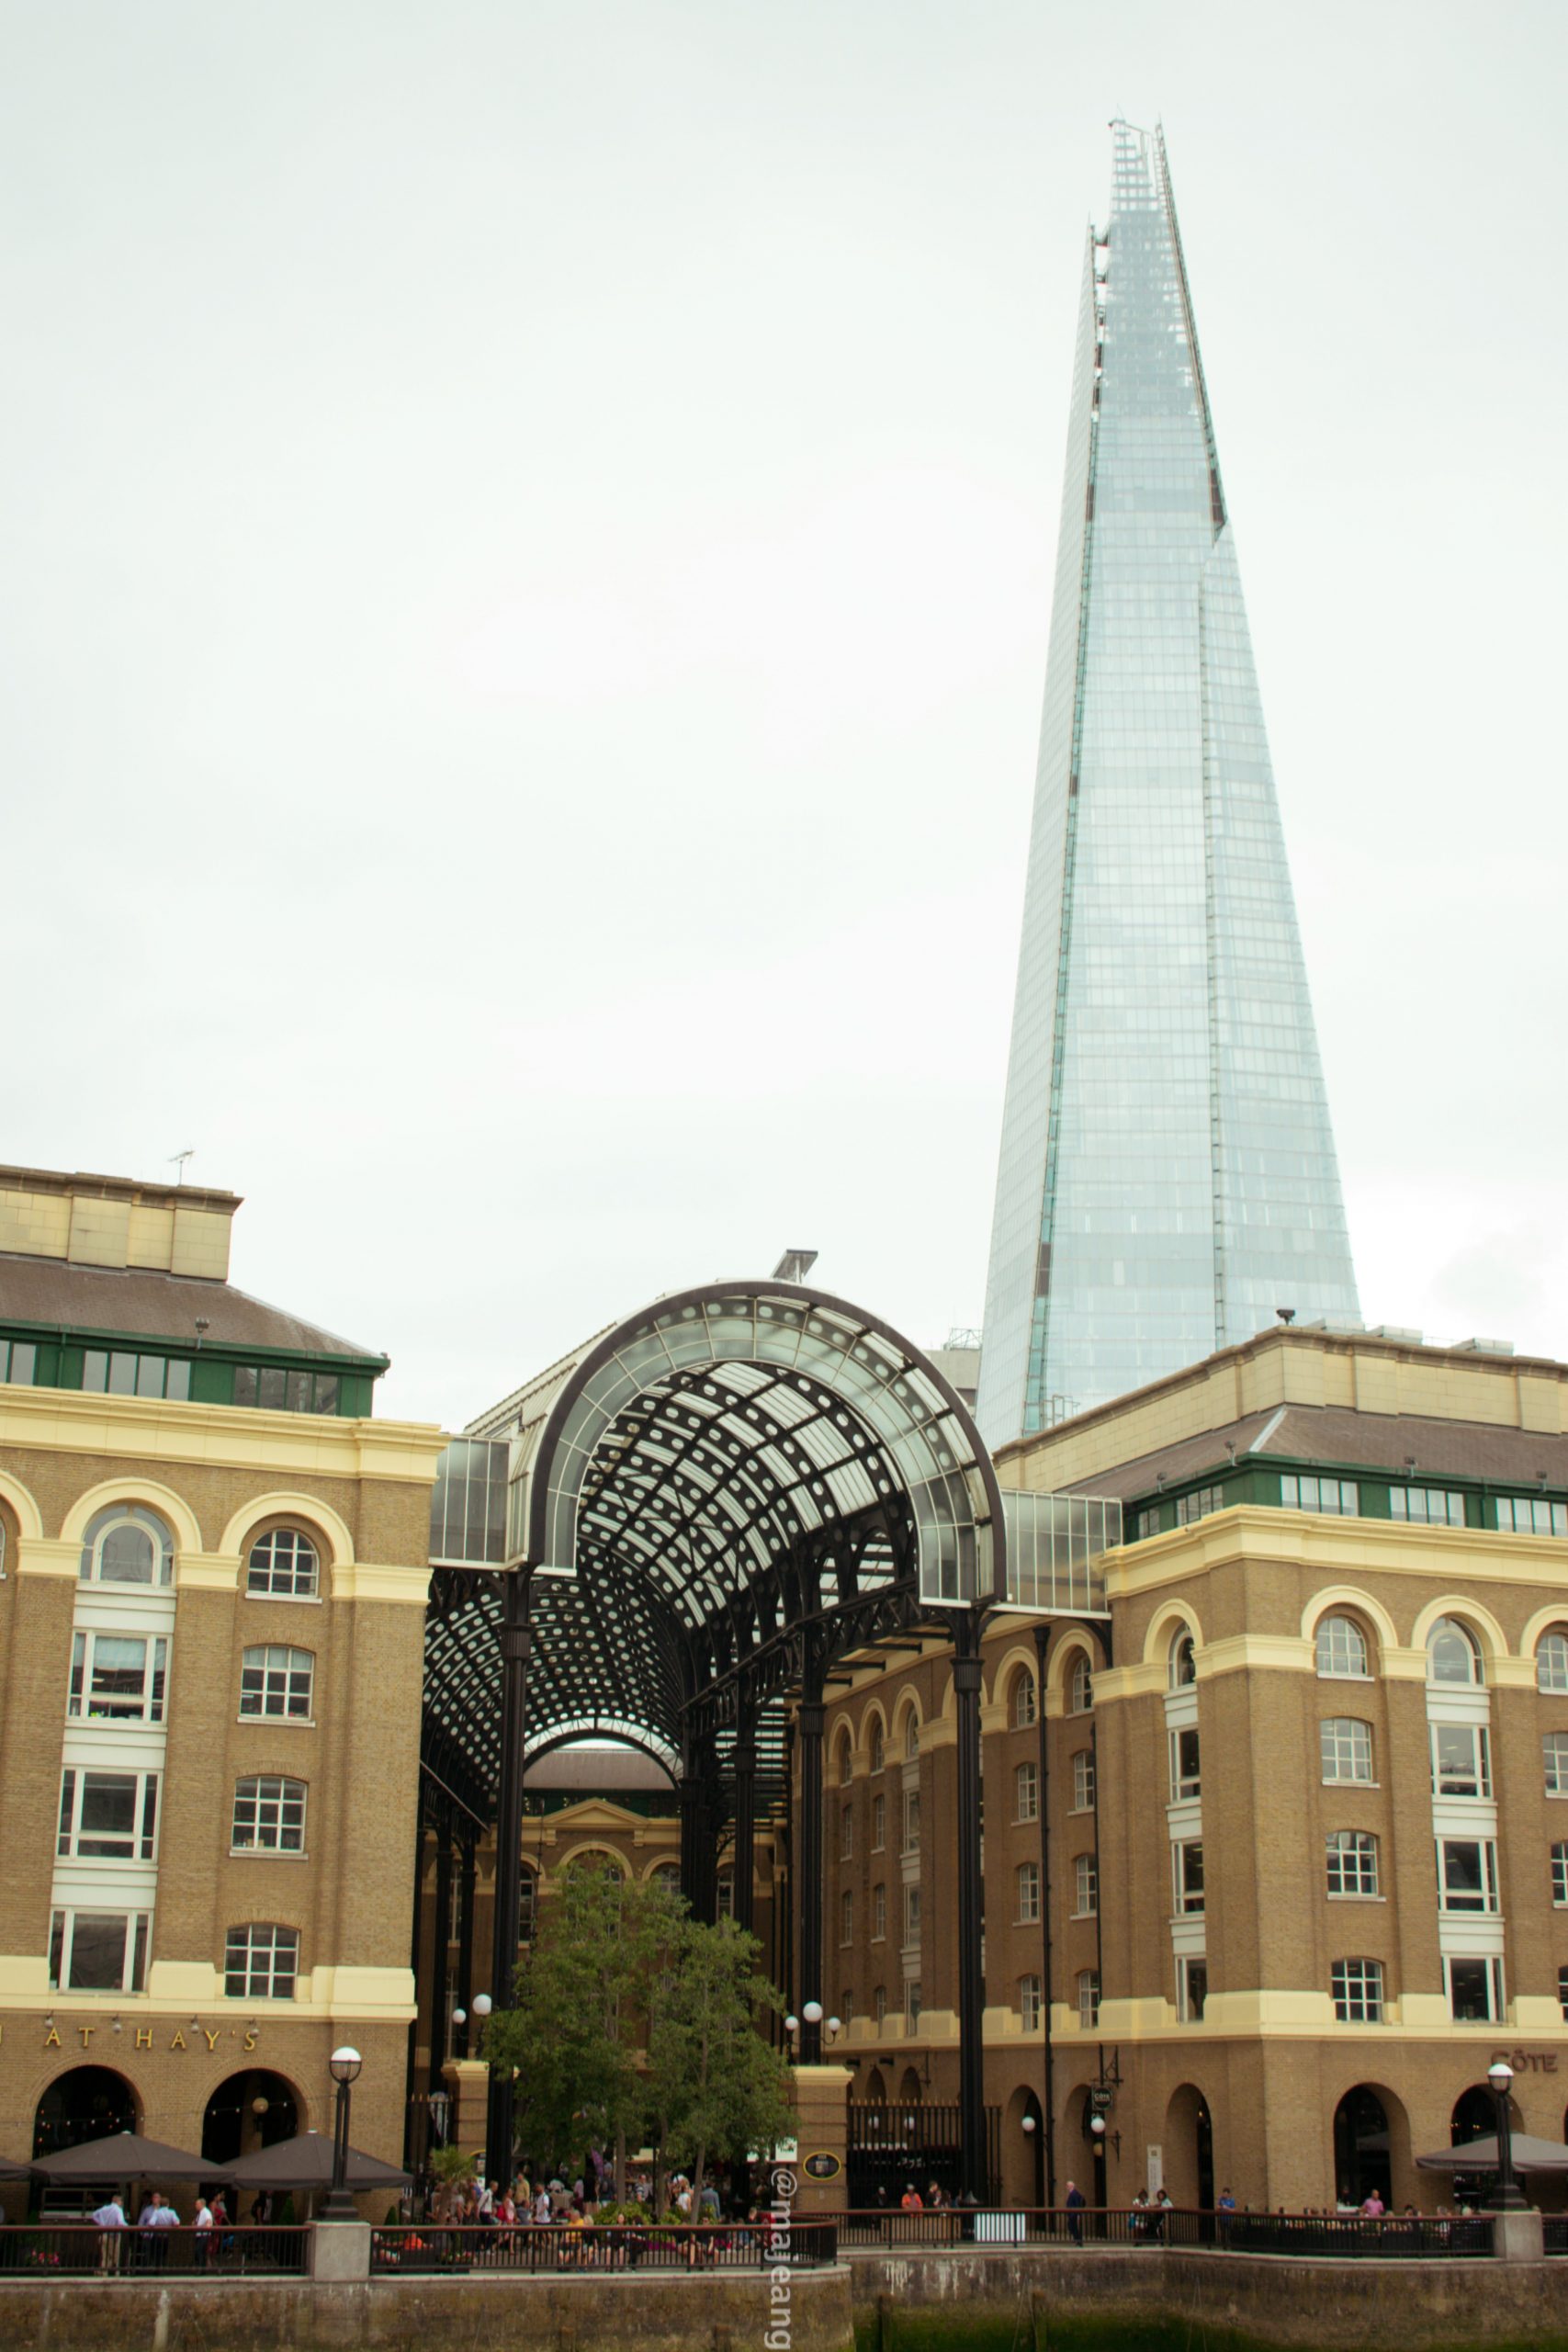 exploring london bridge challenge - hays galleria